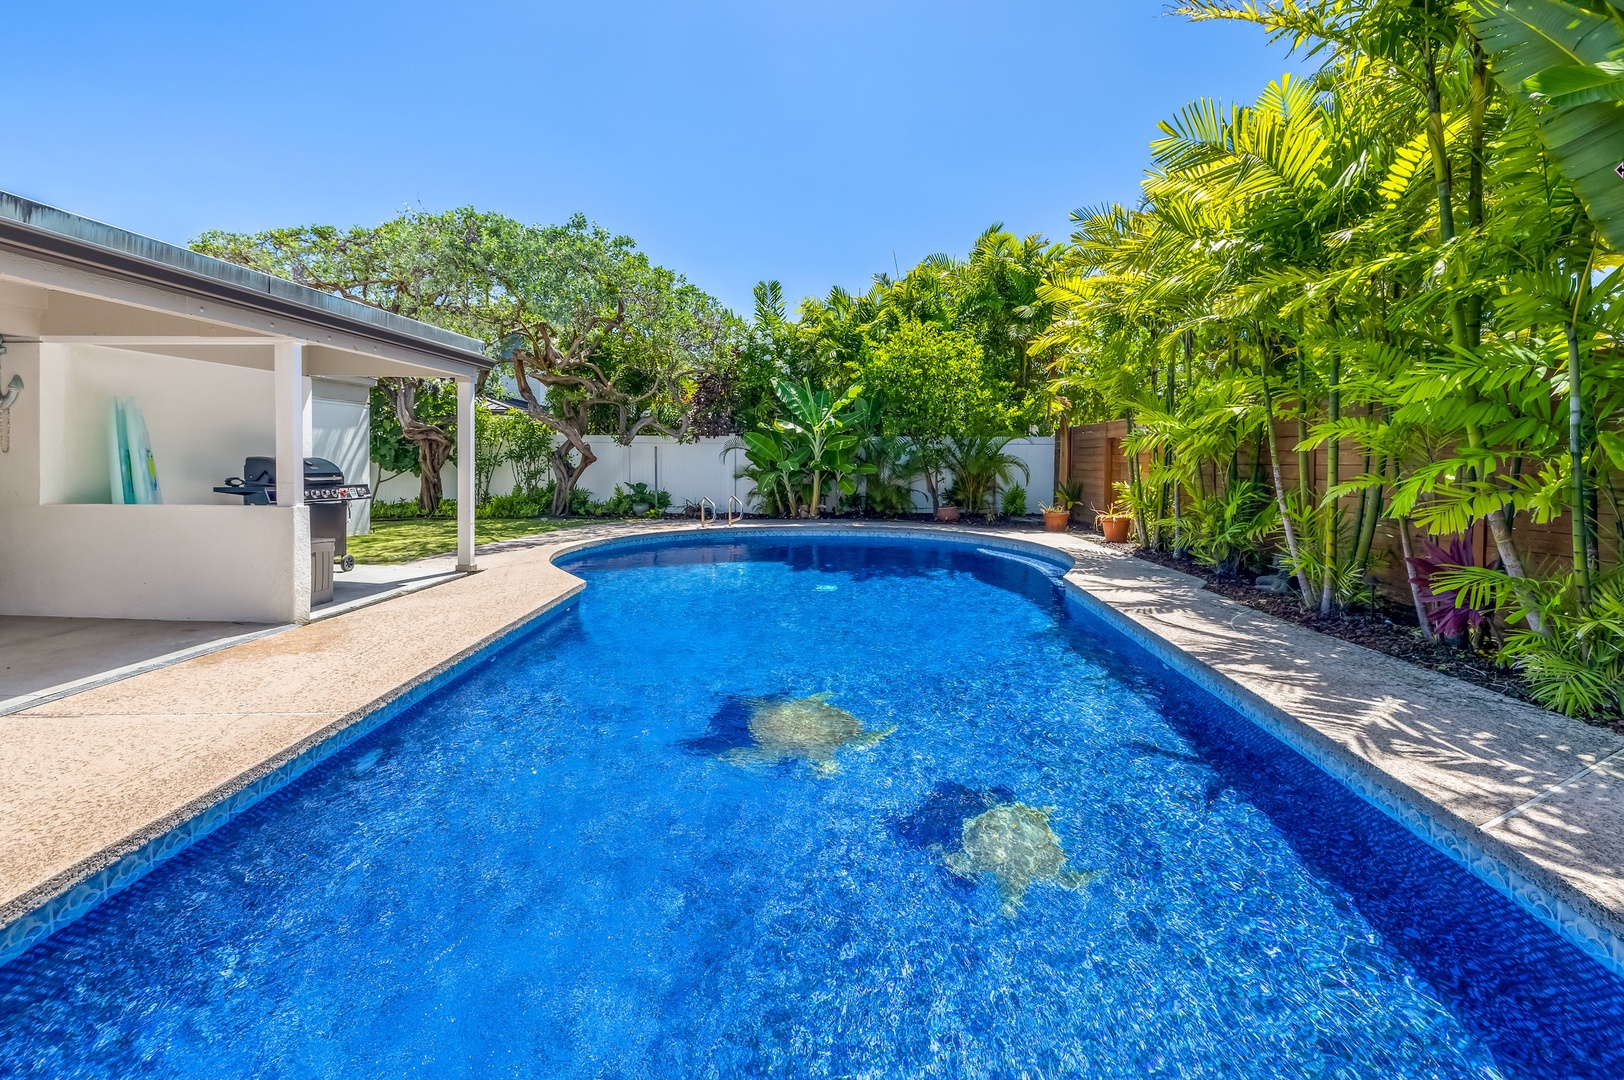 Kailua Vacation Rentals, Lokomaika'i Kailua - Crystal clear pool, perfect for soaking under the Hawaii sun!